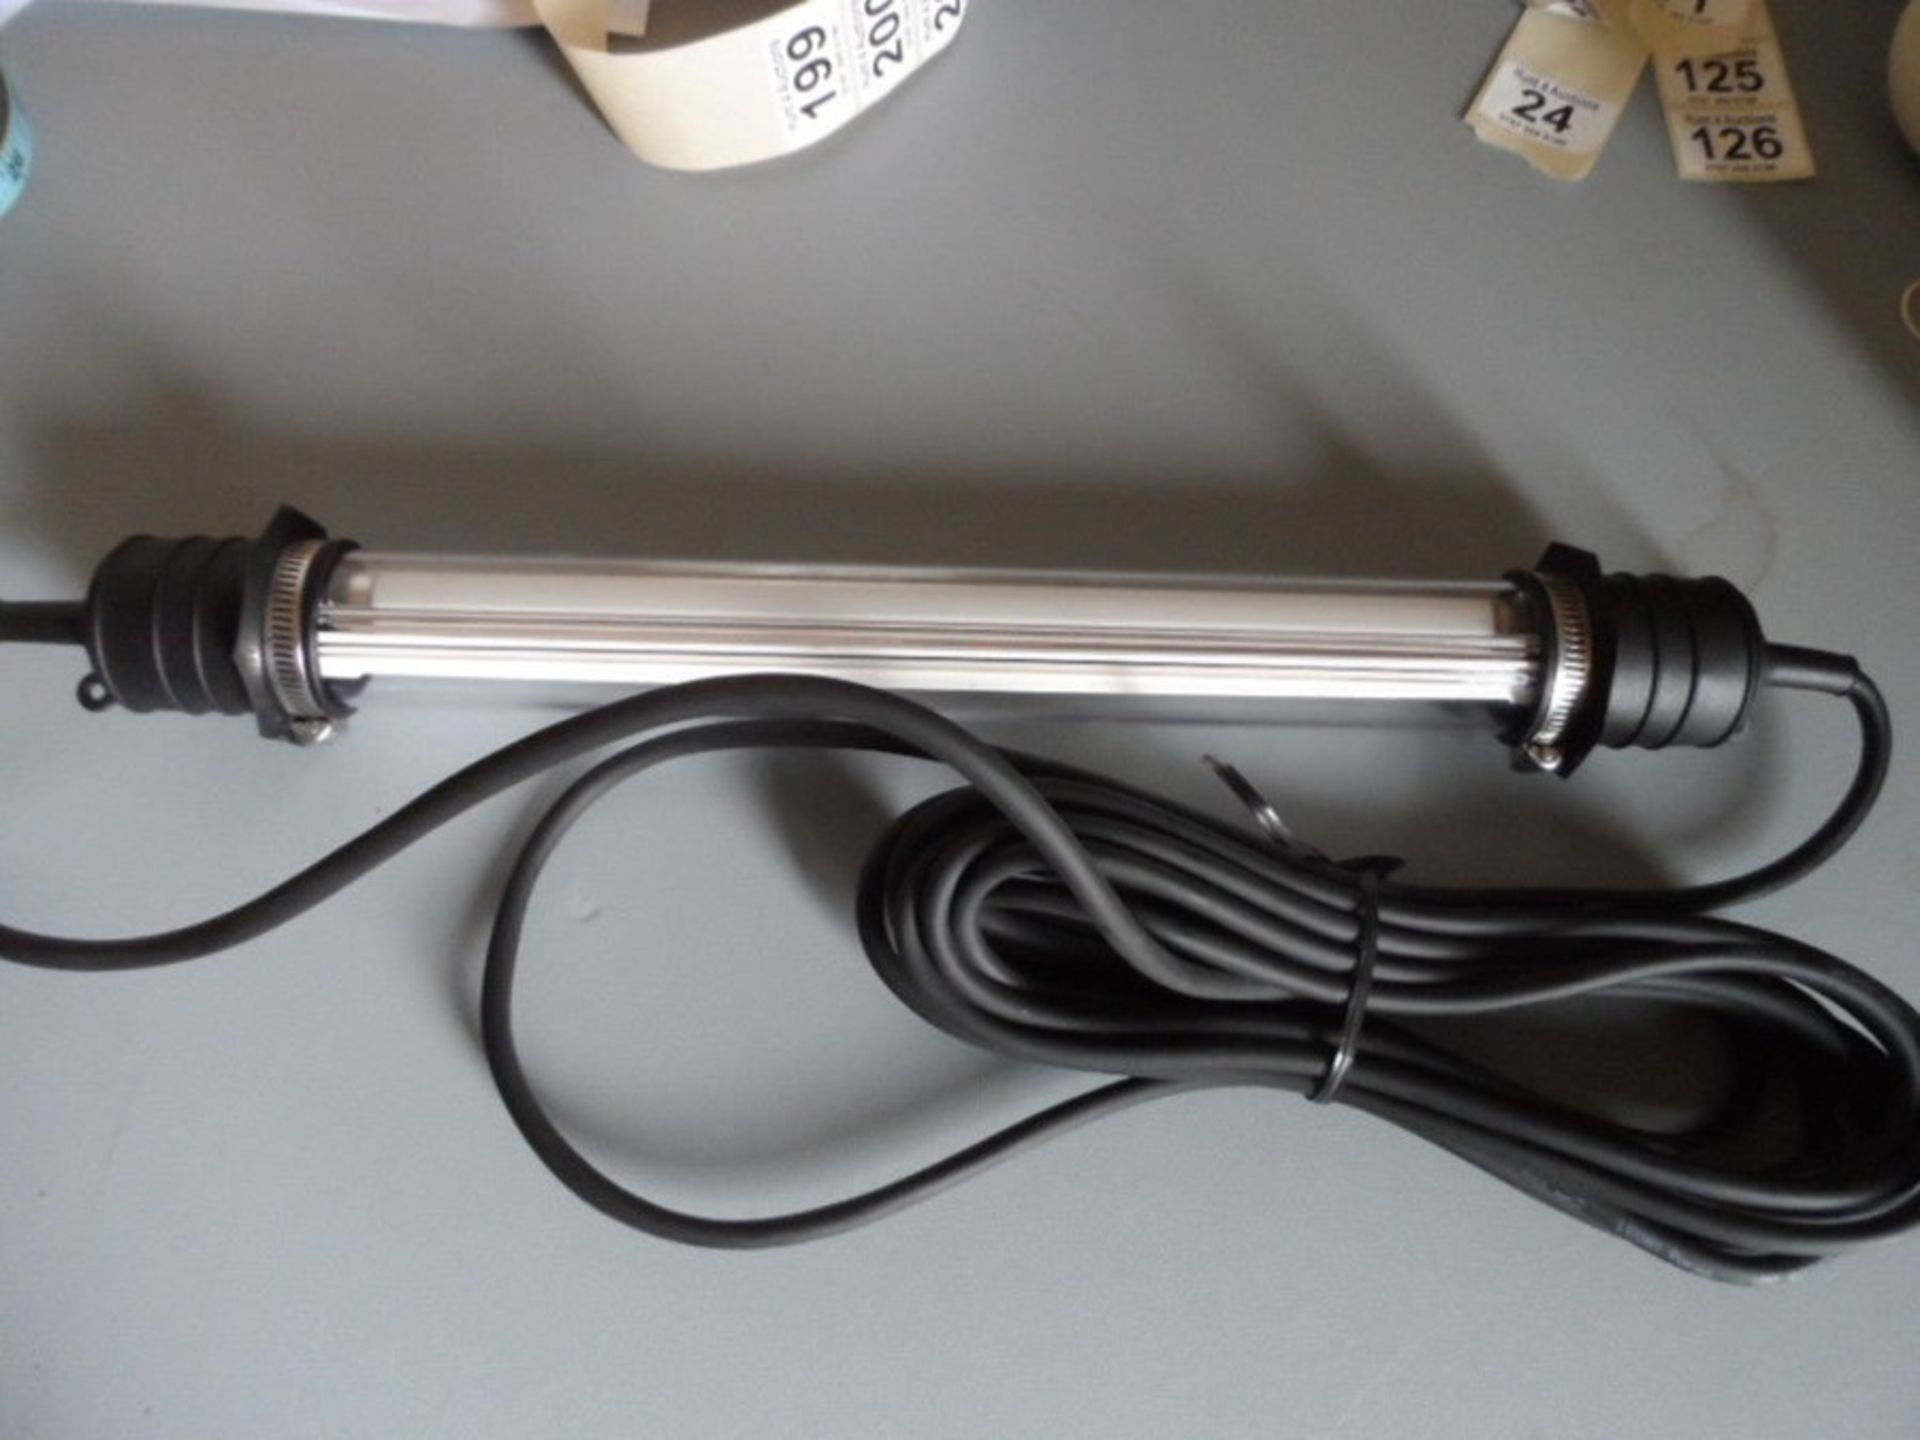 Inspection lamp - Fluorescent inspection handlamp 8W 240V -Briticent 1005 603817